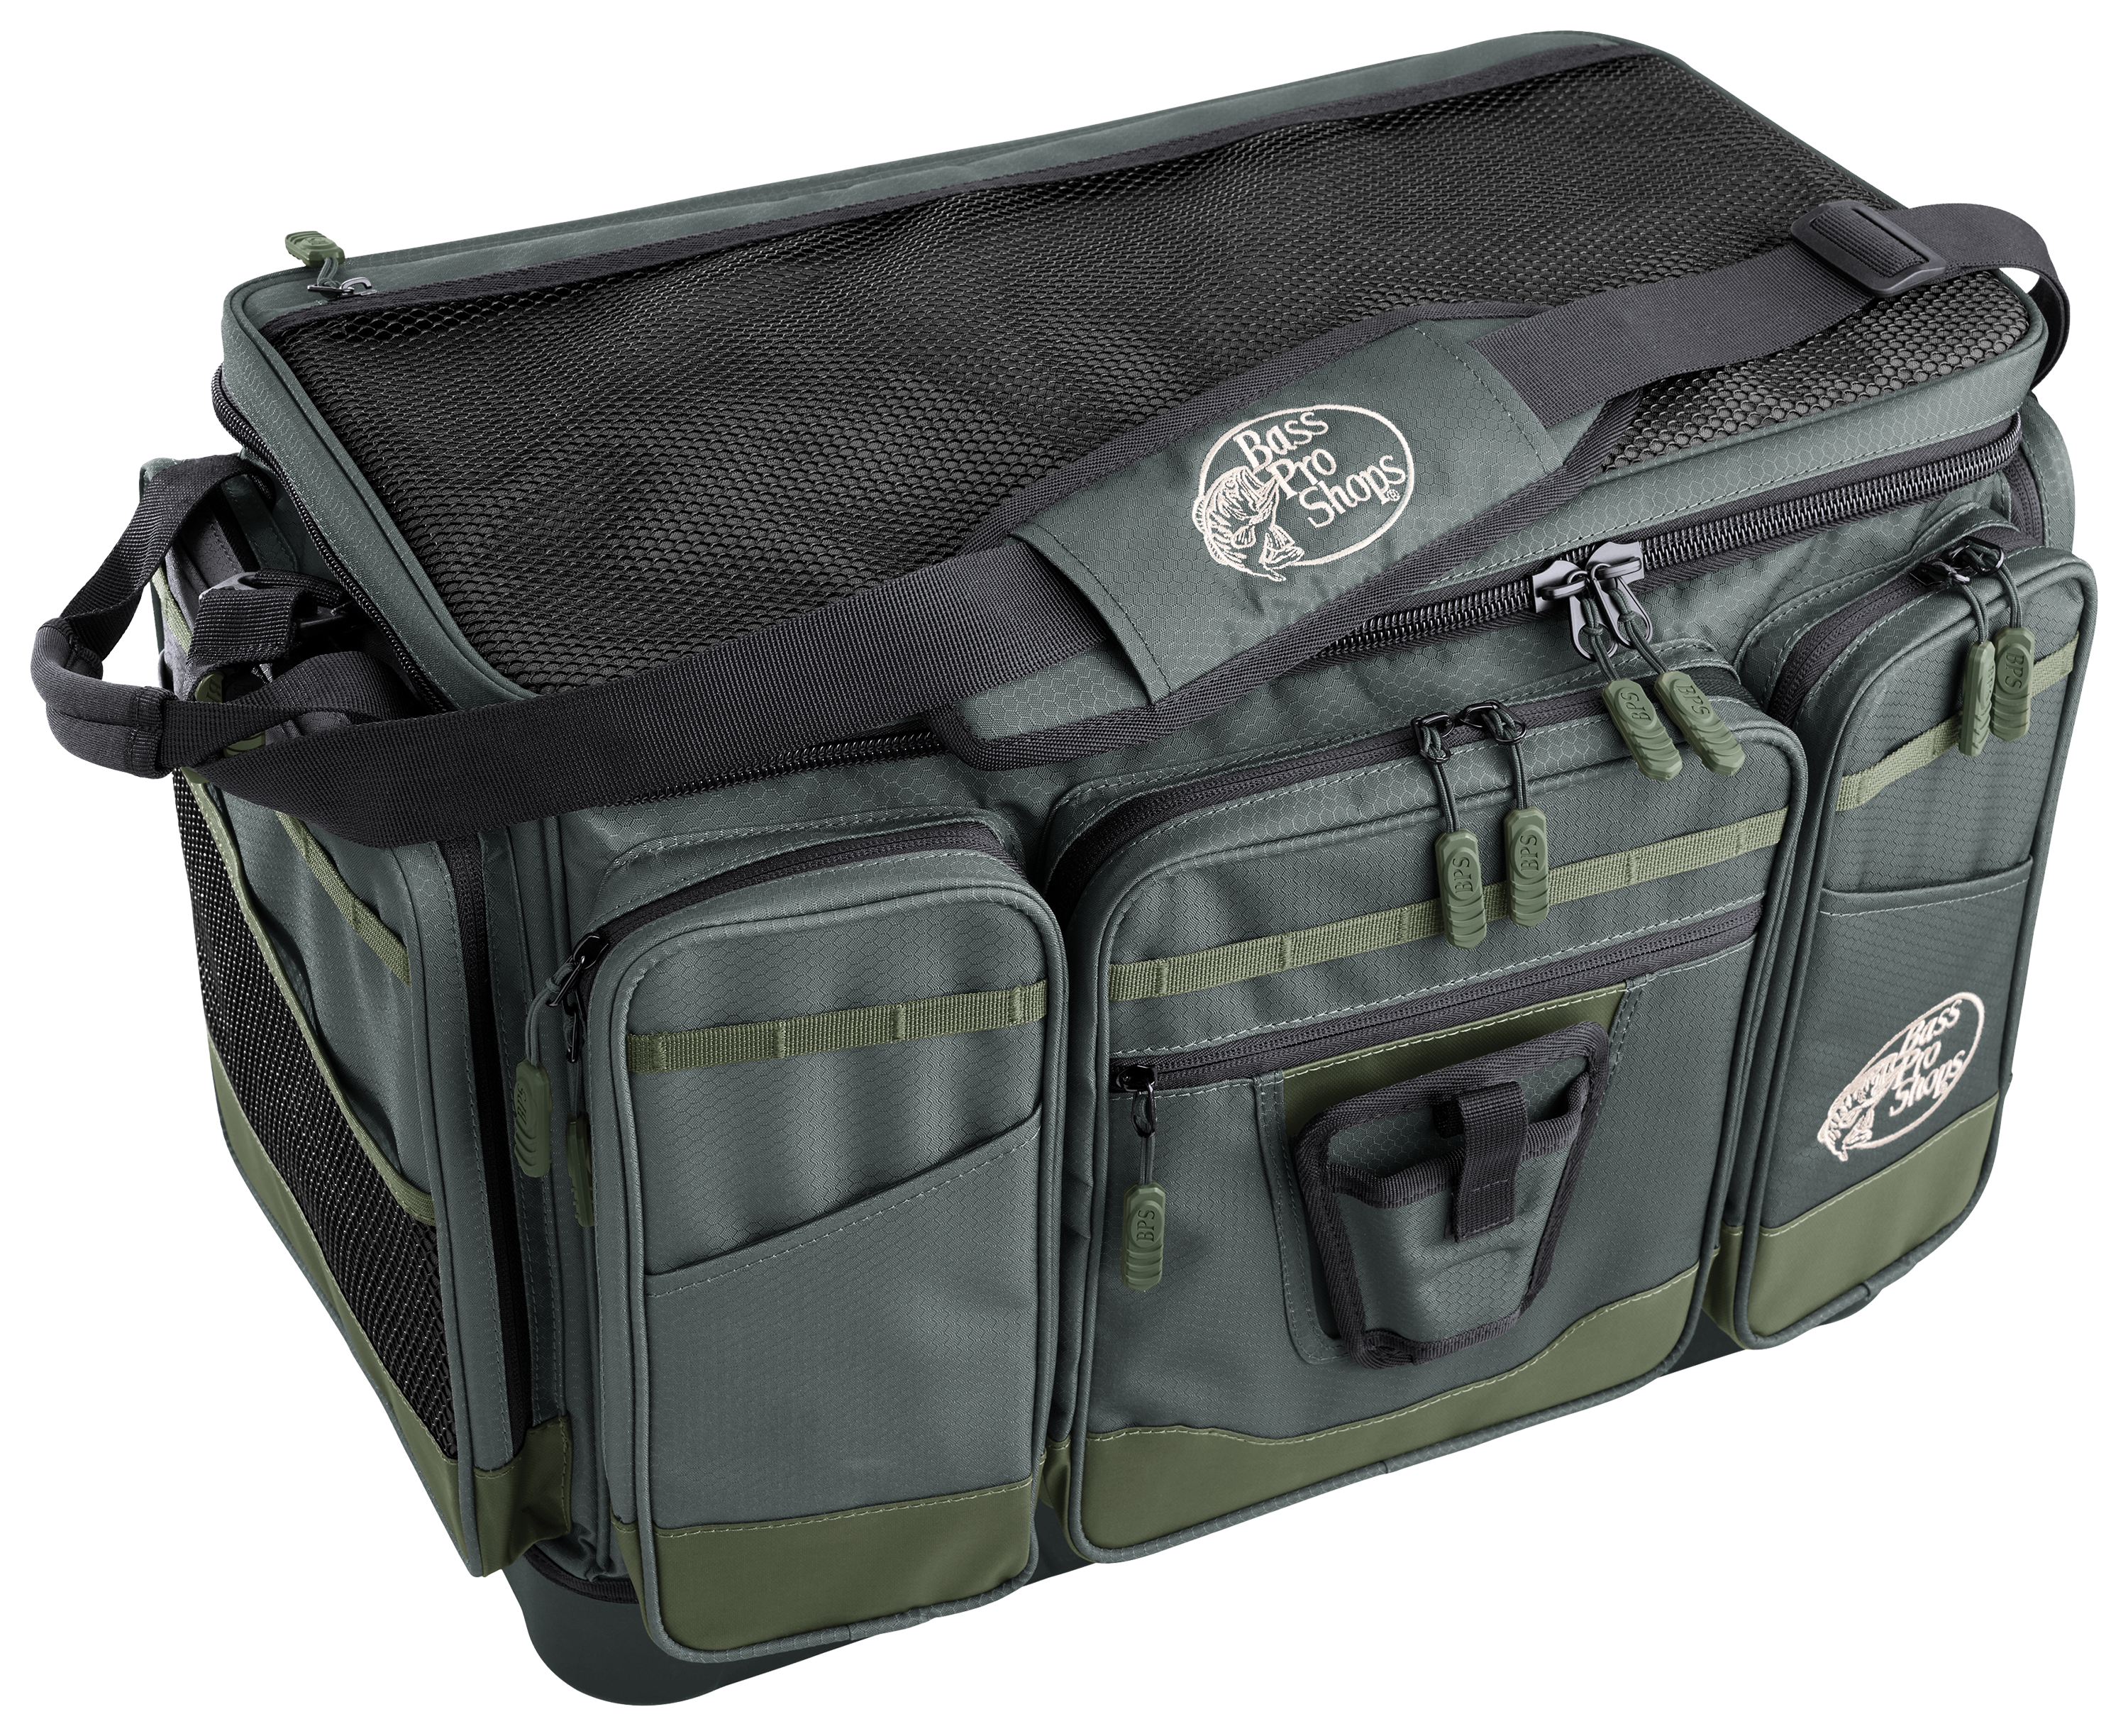 Bass Pro Shops Extreme Series 3600 Tackle Bag - Gray/Green